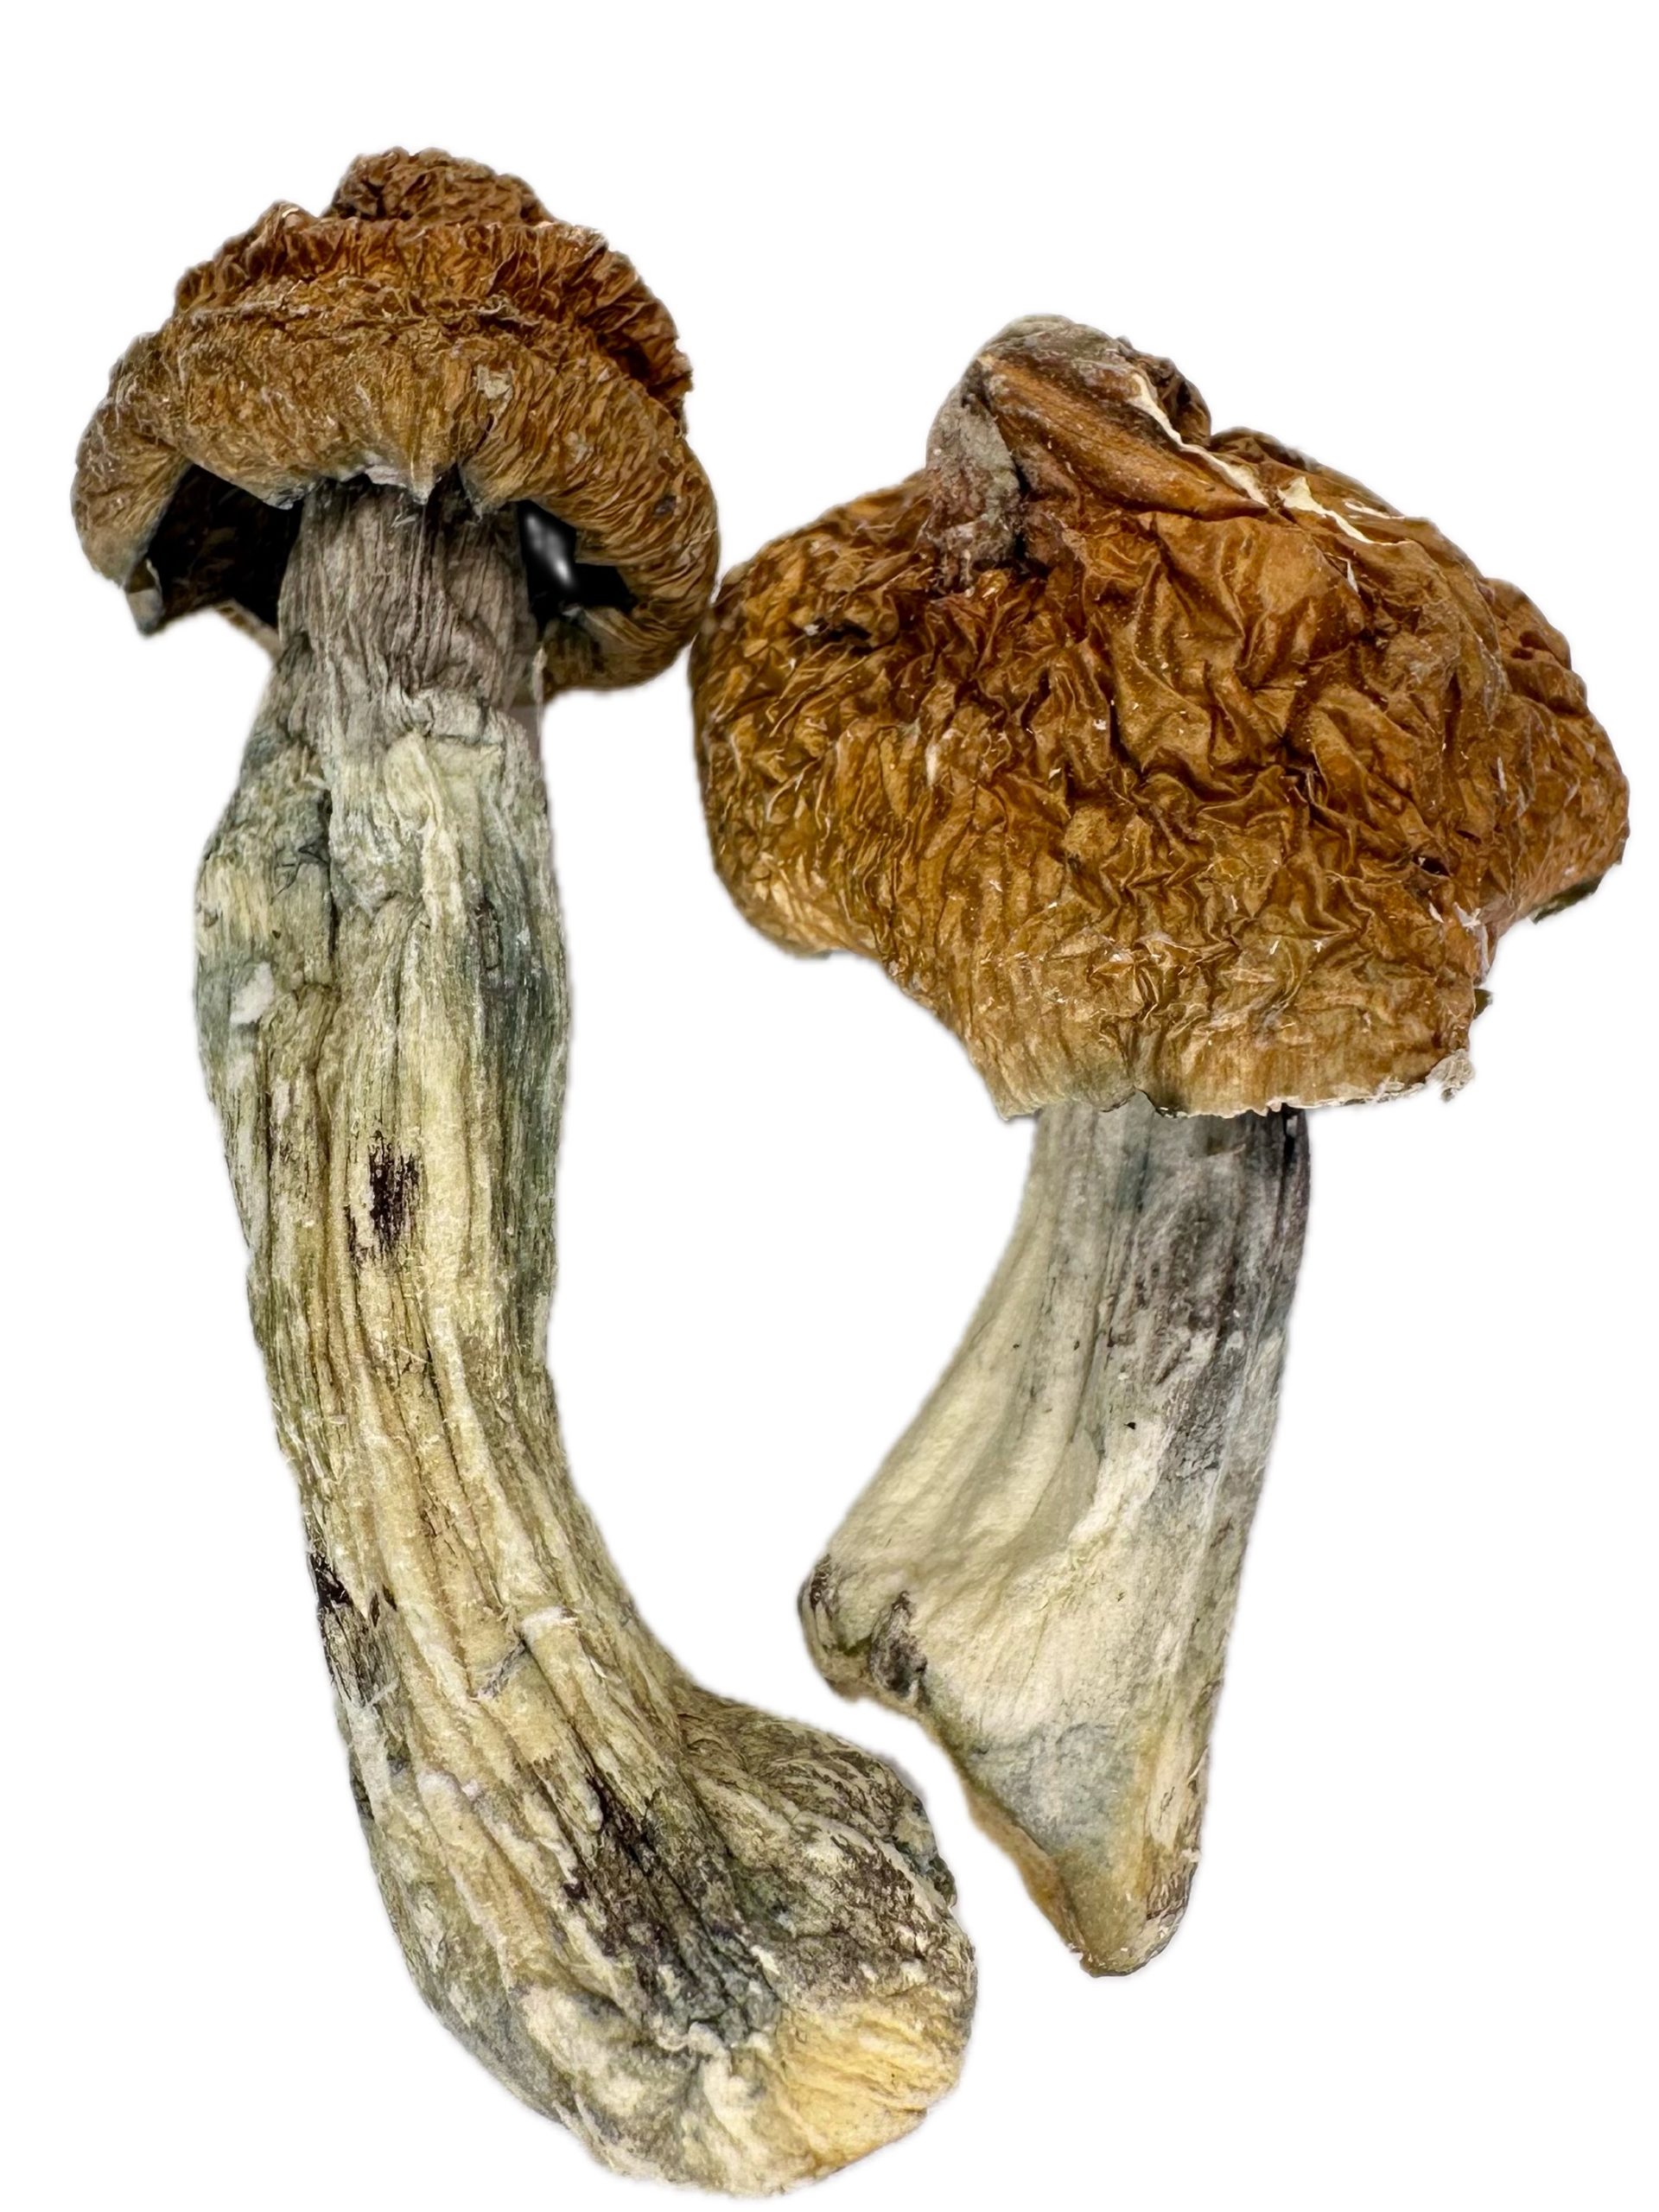 Golden Teacher x SA Natalensis – Dry Mushrooms – Dry Mushrooms